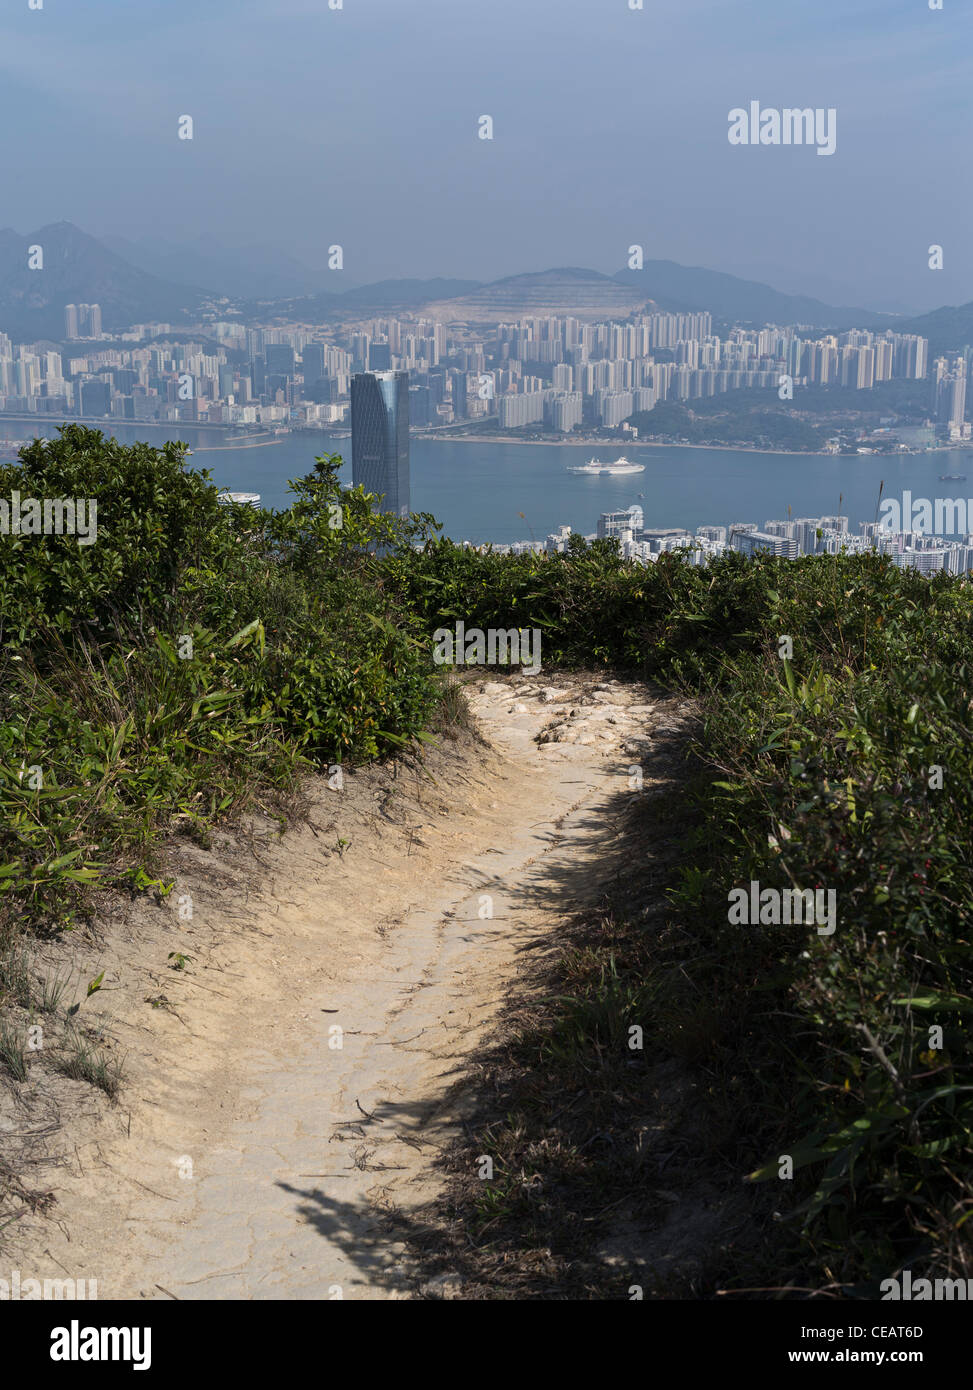 dh braemar collina sentiero CAVA BAY HONG KONG sentieri a piedi In collina dietro Braemar collina all'aperto parco di campagna Foto Stock